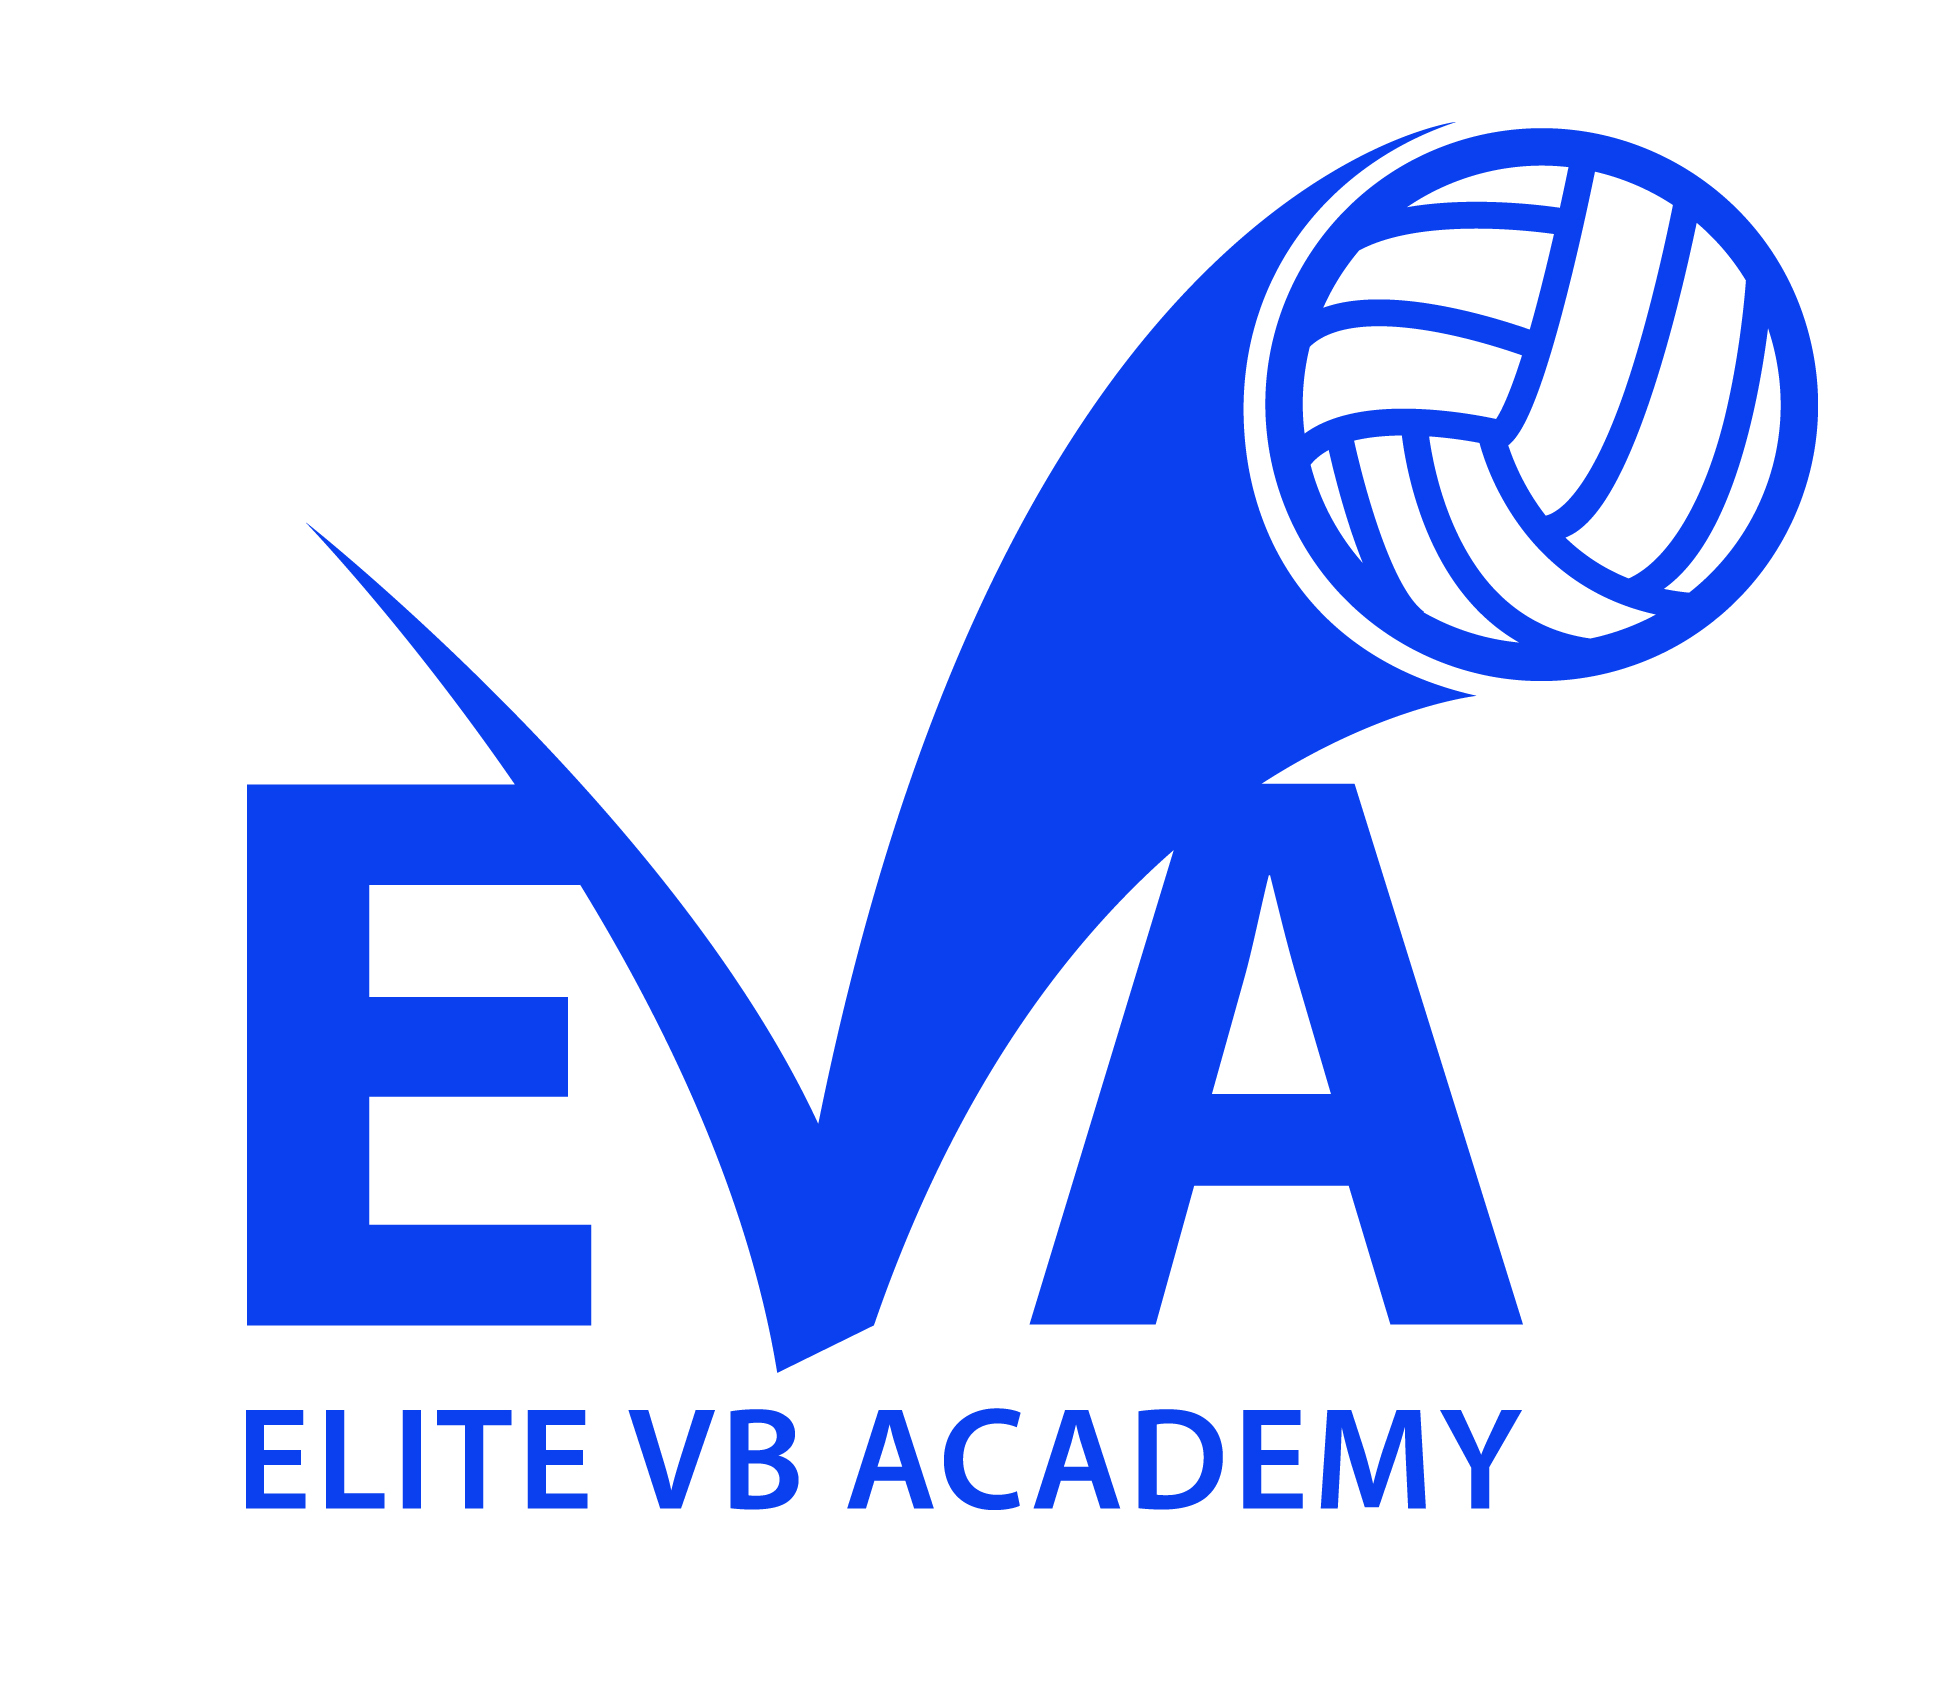 Elite VB Academy